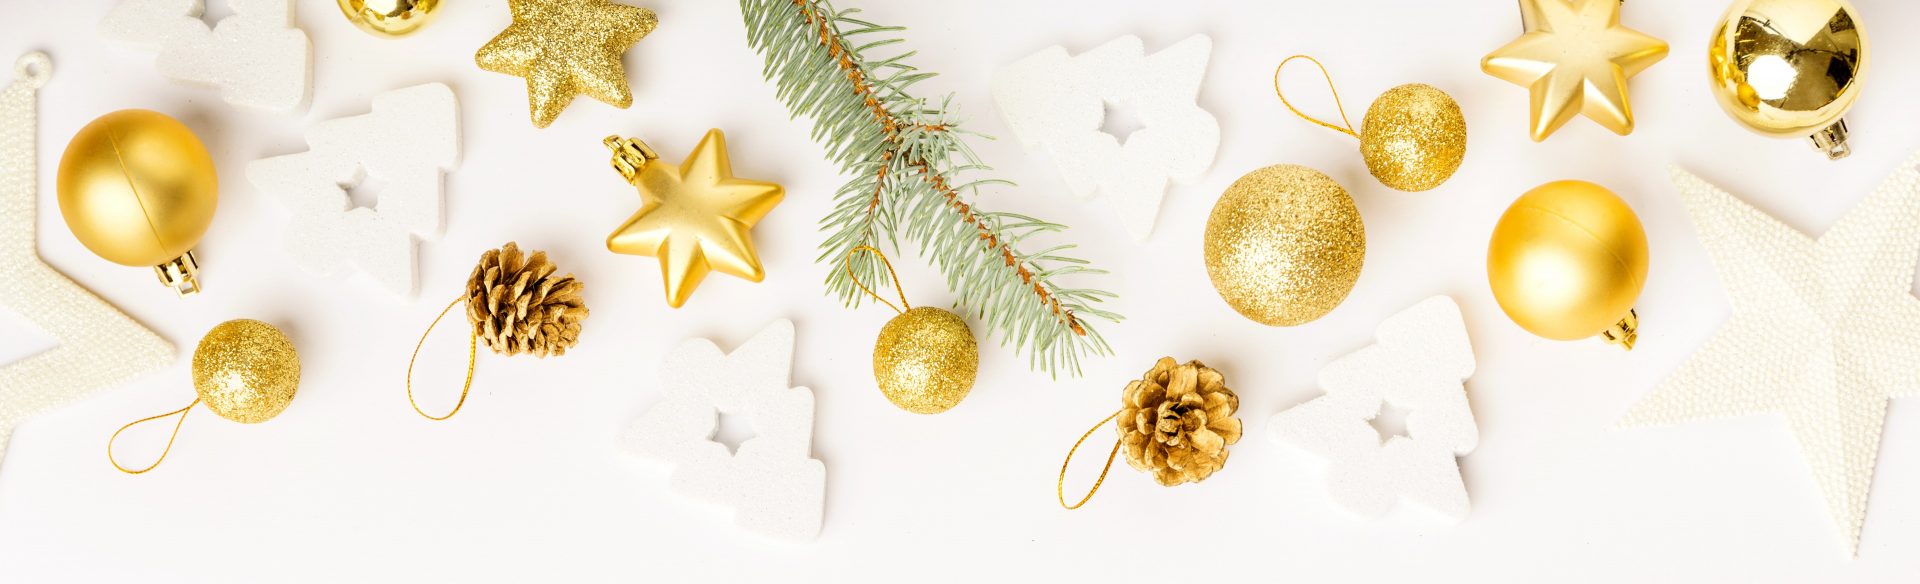 christmas-golden-decoration-on-white